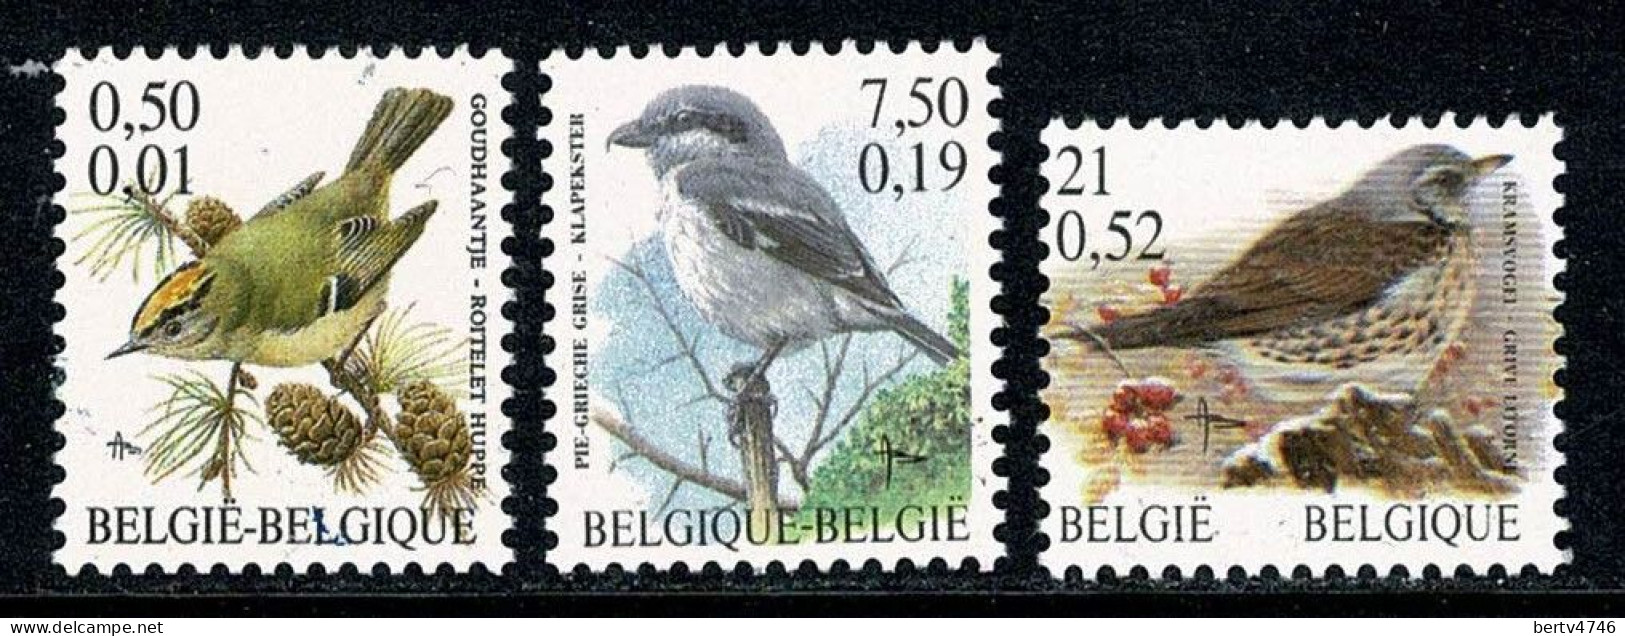 Belg. 2001 COB/OBP 2985, 2986, 2987**, Yv 2980, 2981, 2982**, MNH - Unused Stamps